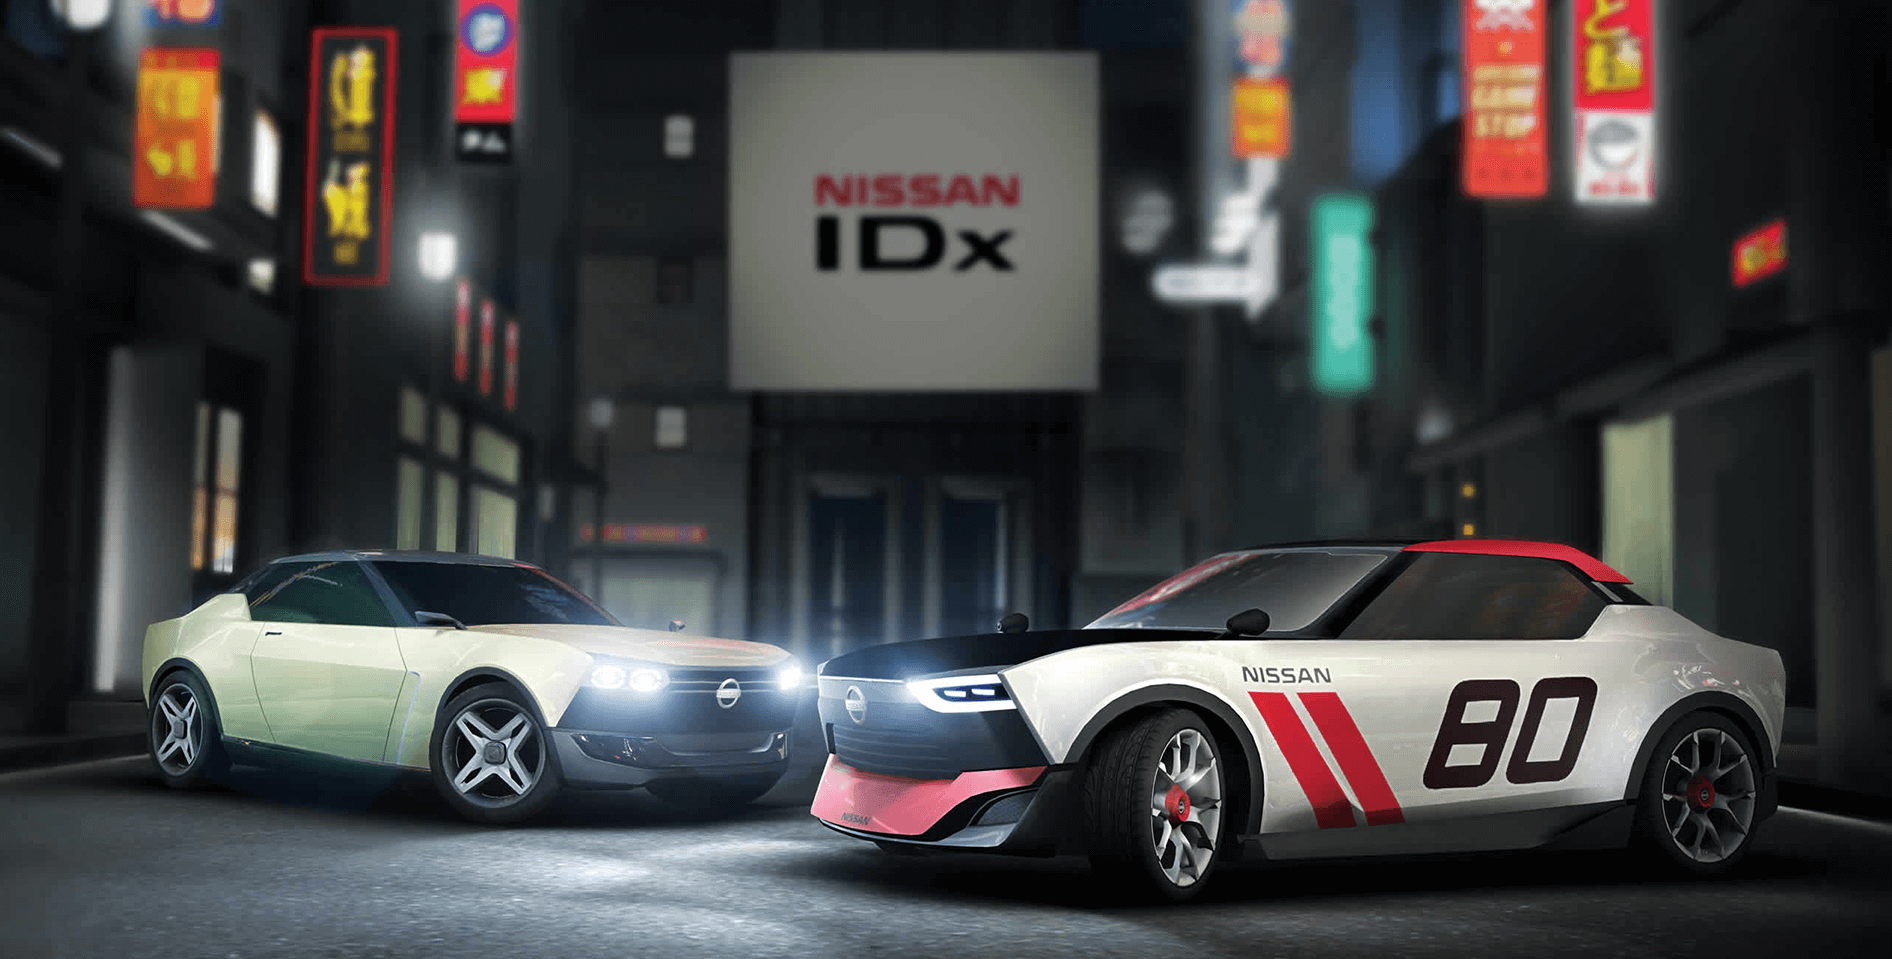 Nissan IDX VR